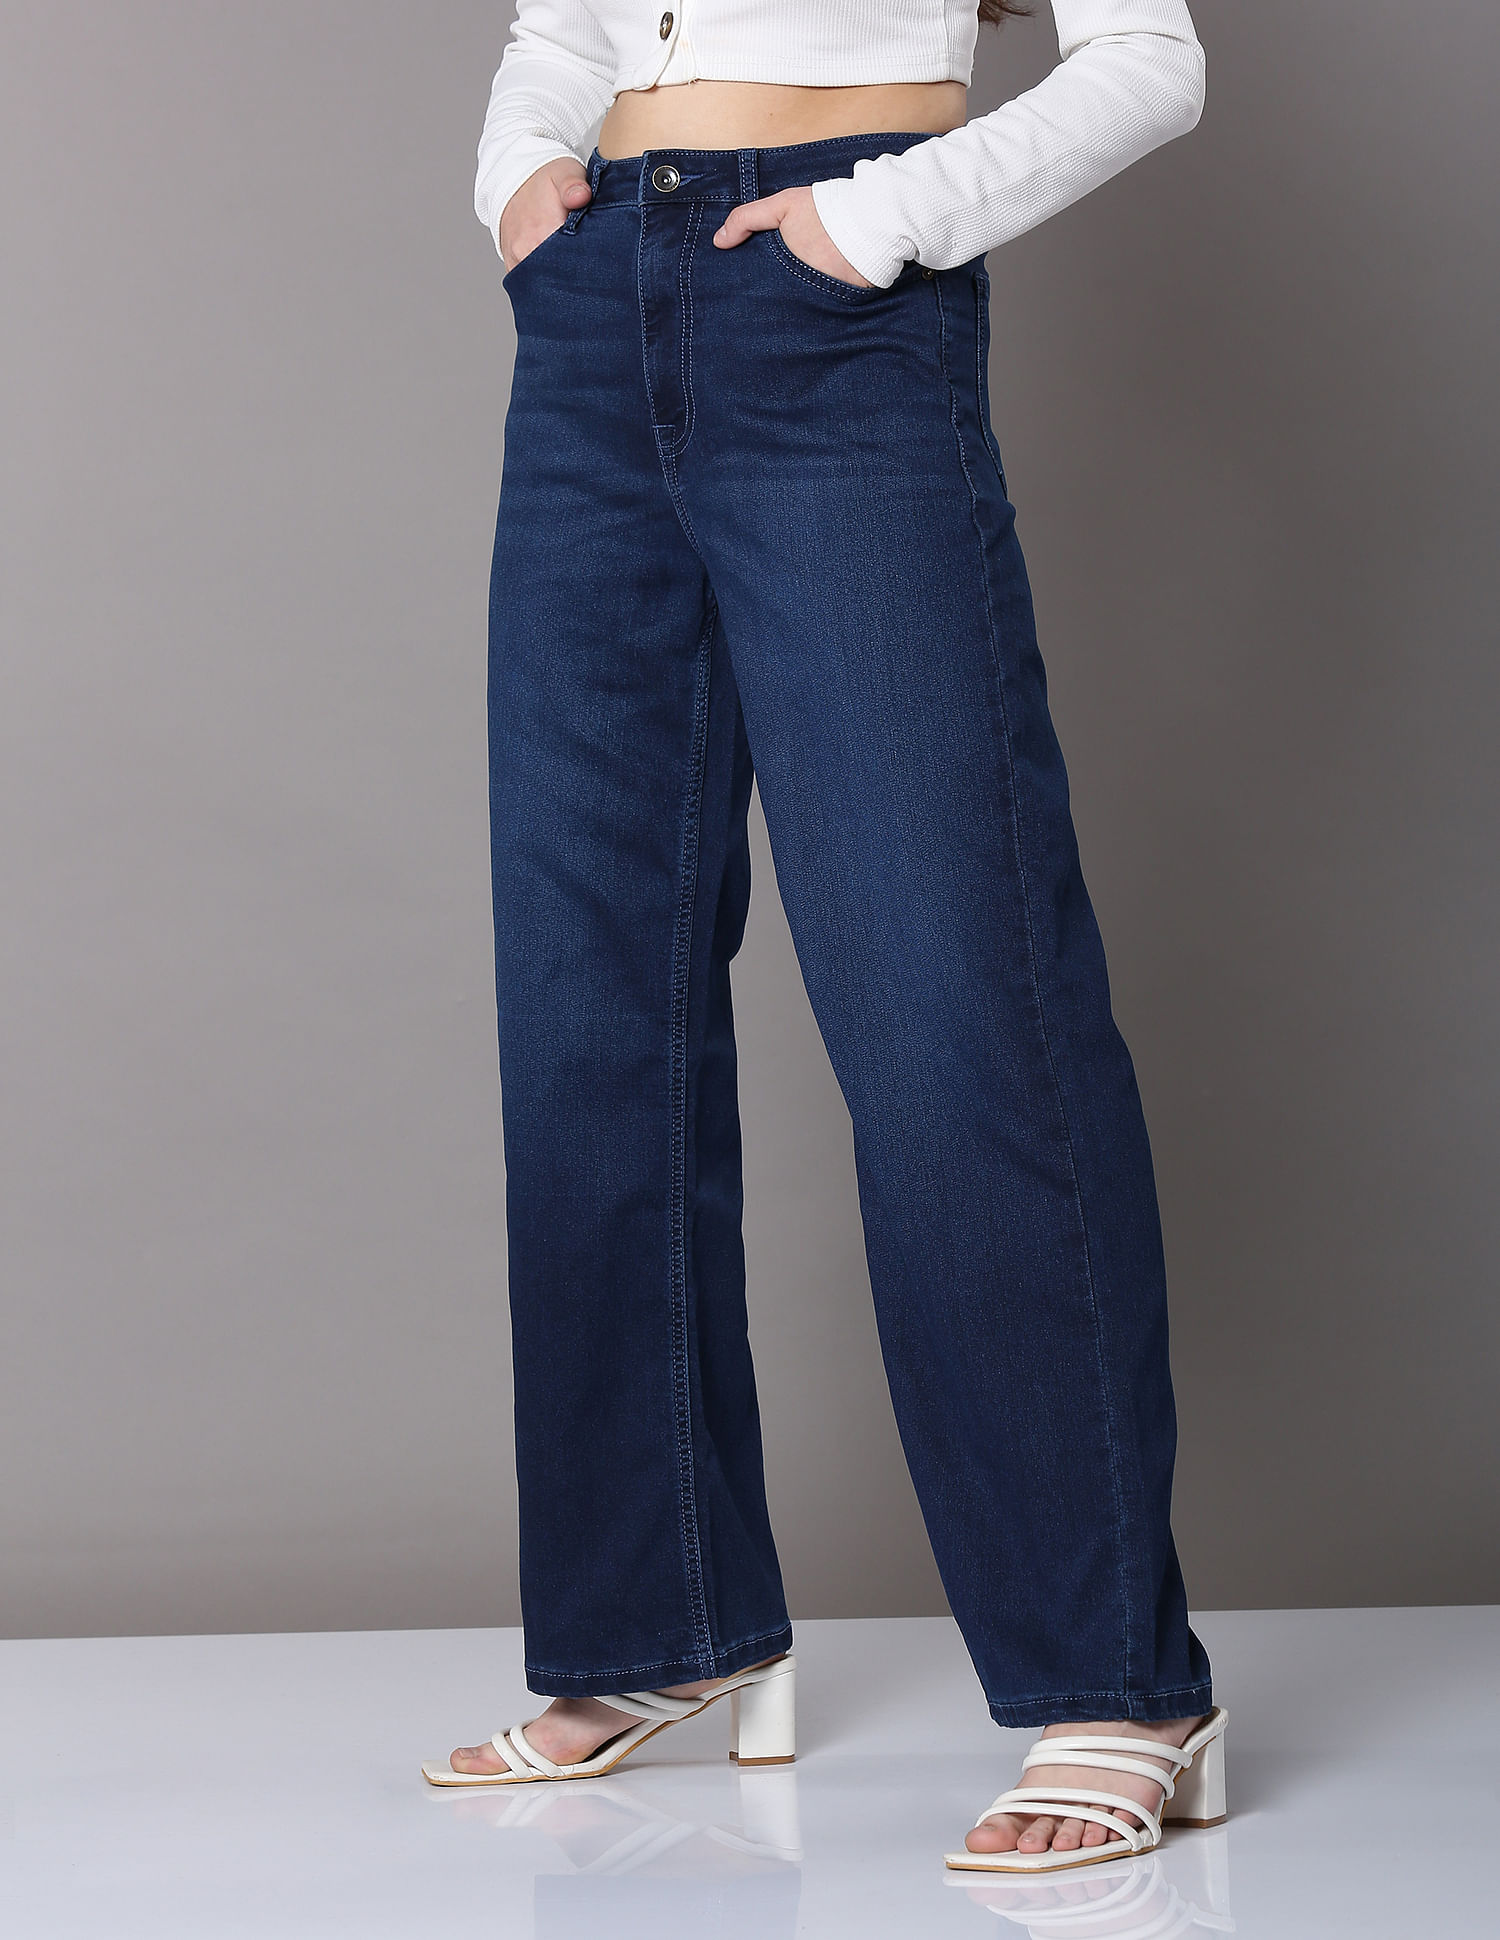 Do dark blue jeans go with everything? - Quora-lmd.edu.vn